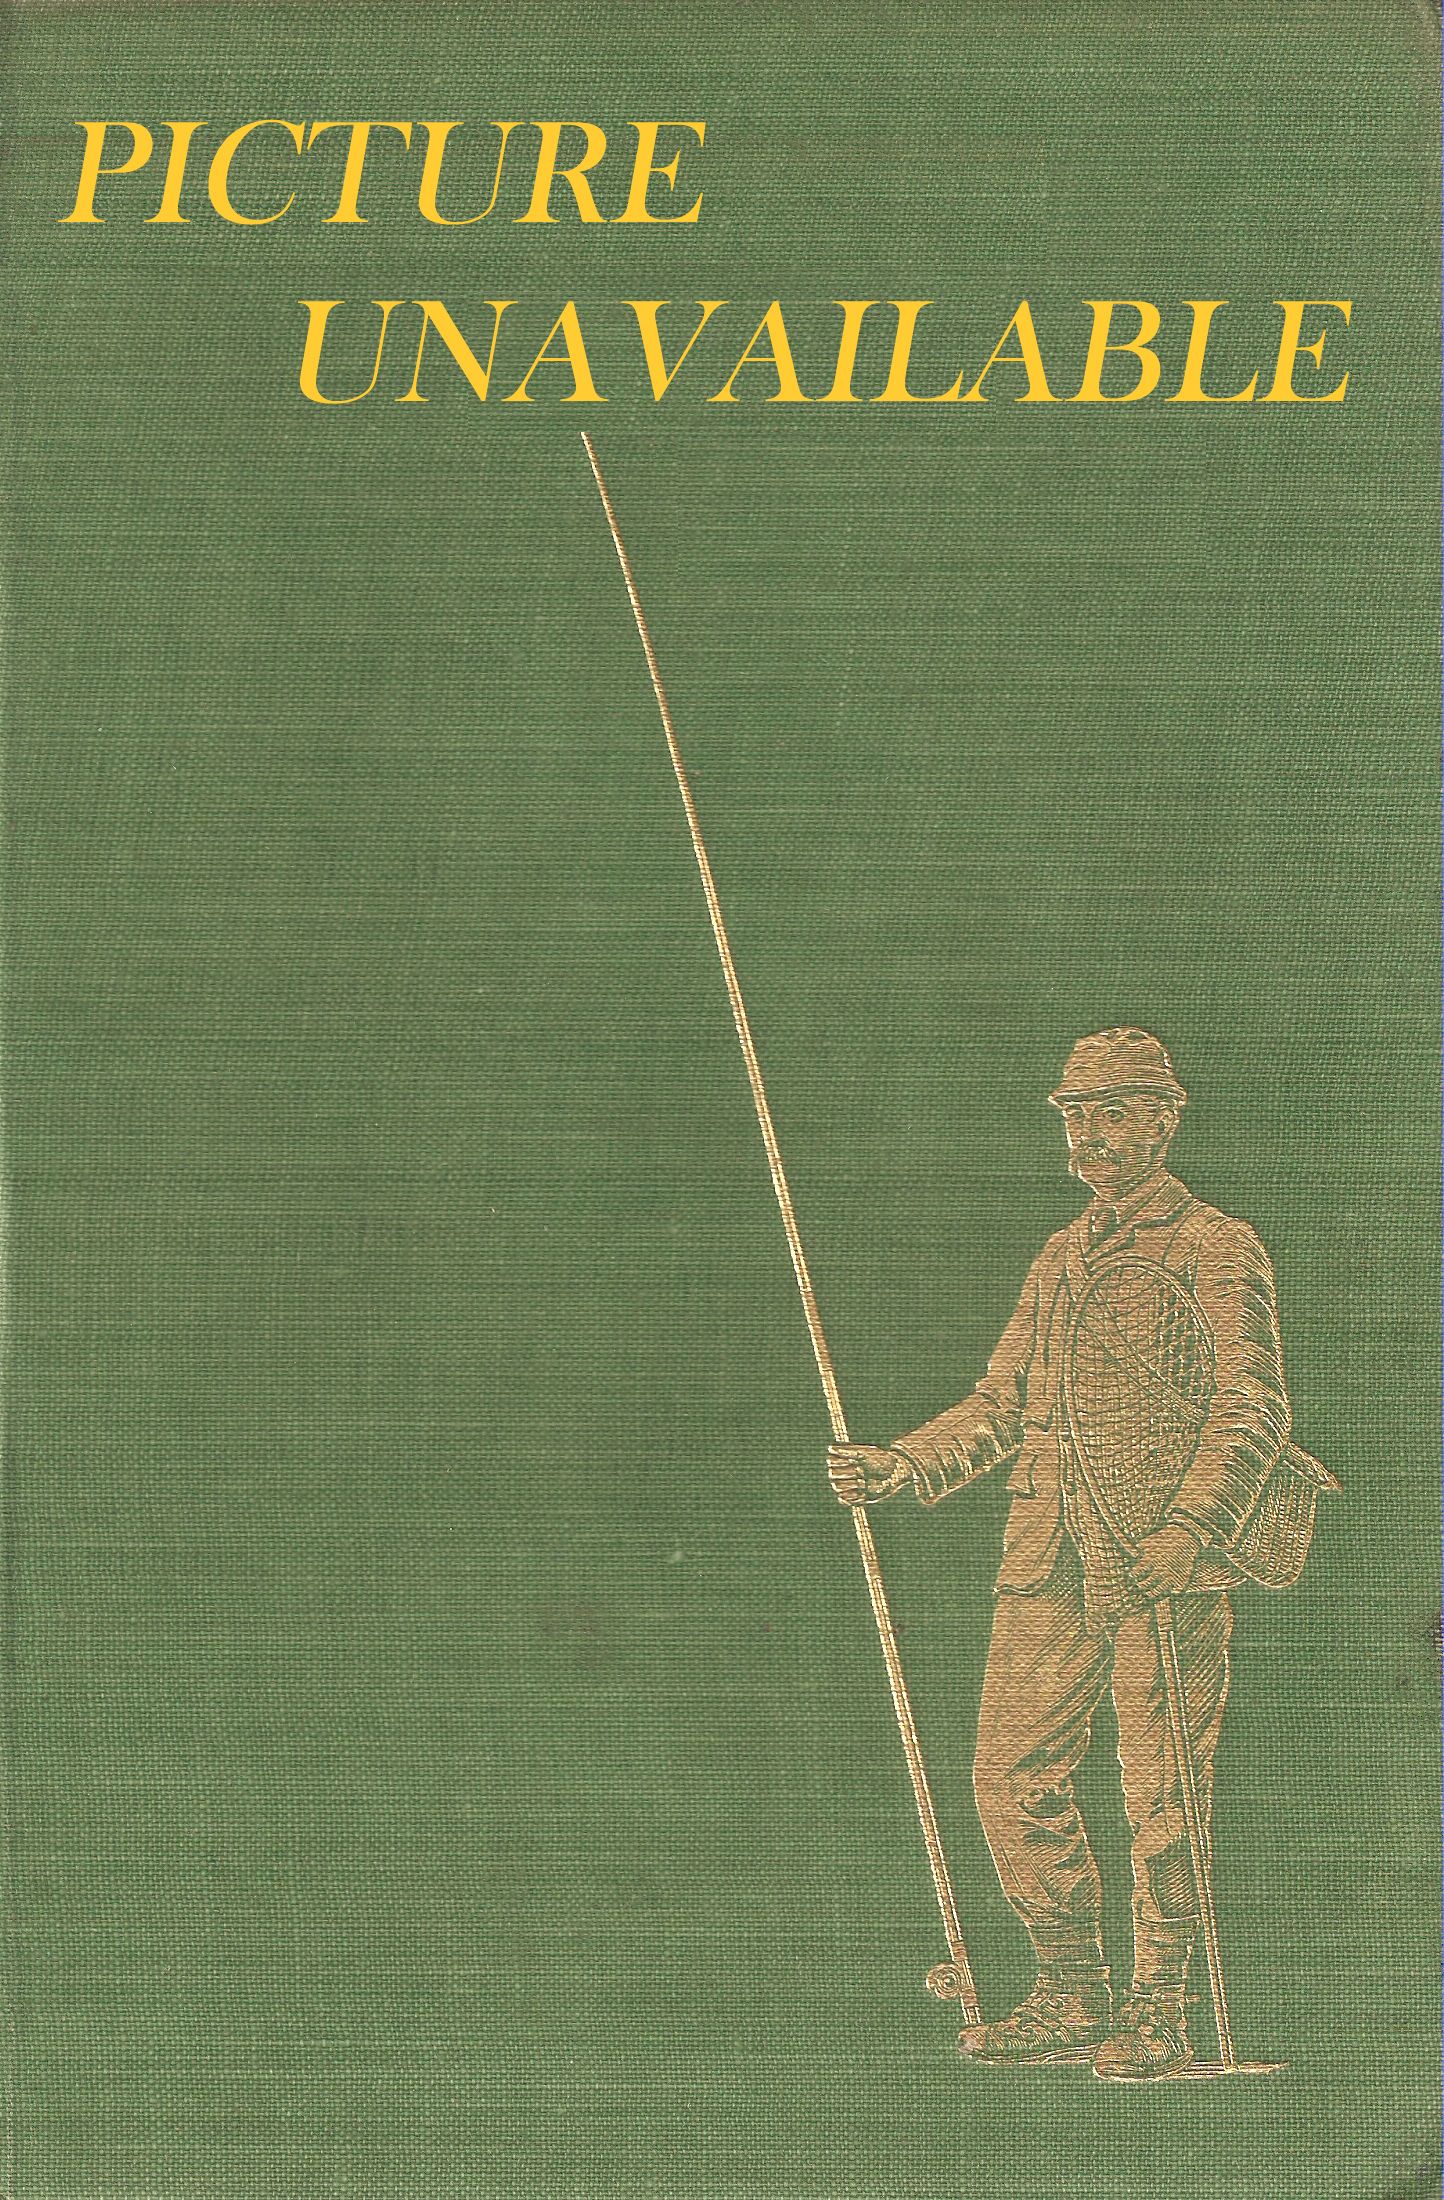 Big Pike - Bucknall, Geoffrey 1965-01-01 First edition. Angling Times Books  - Go